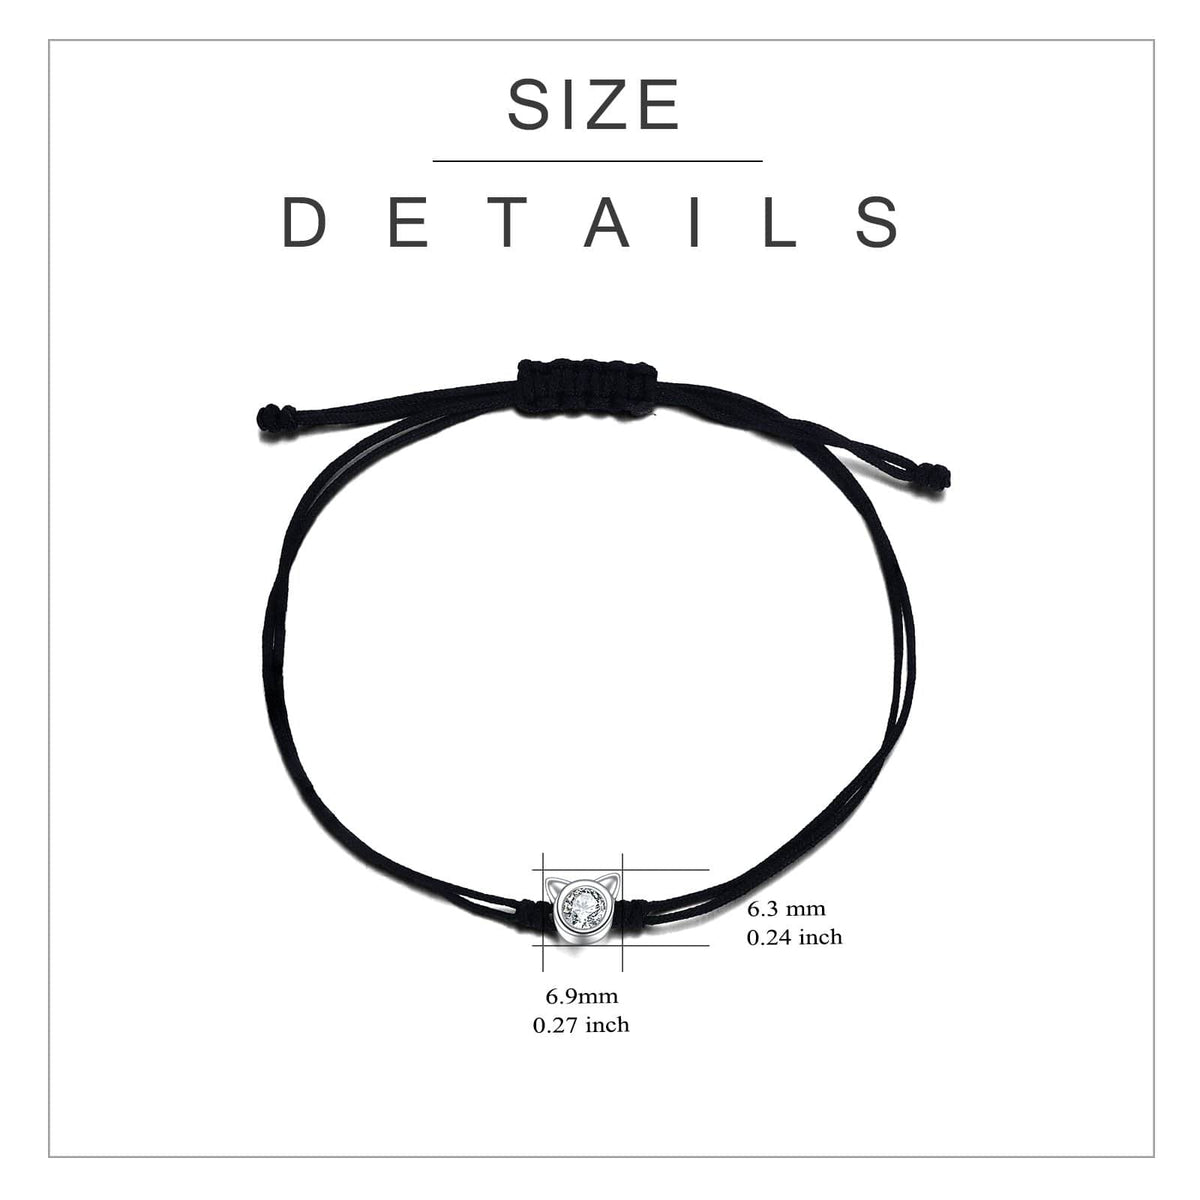 Diamond and Black String Bracelet